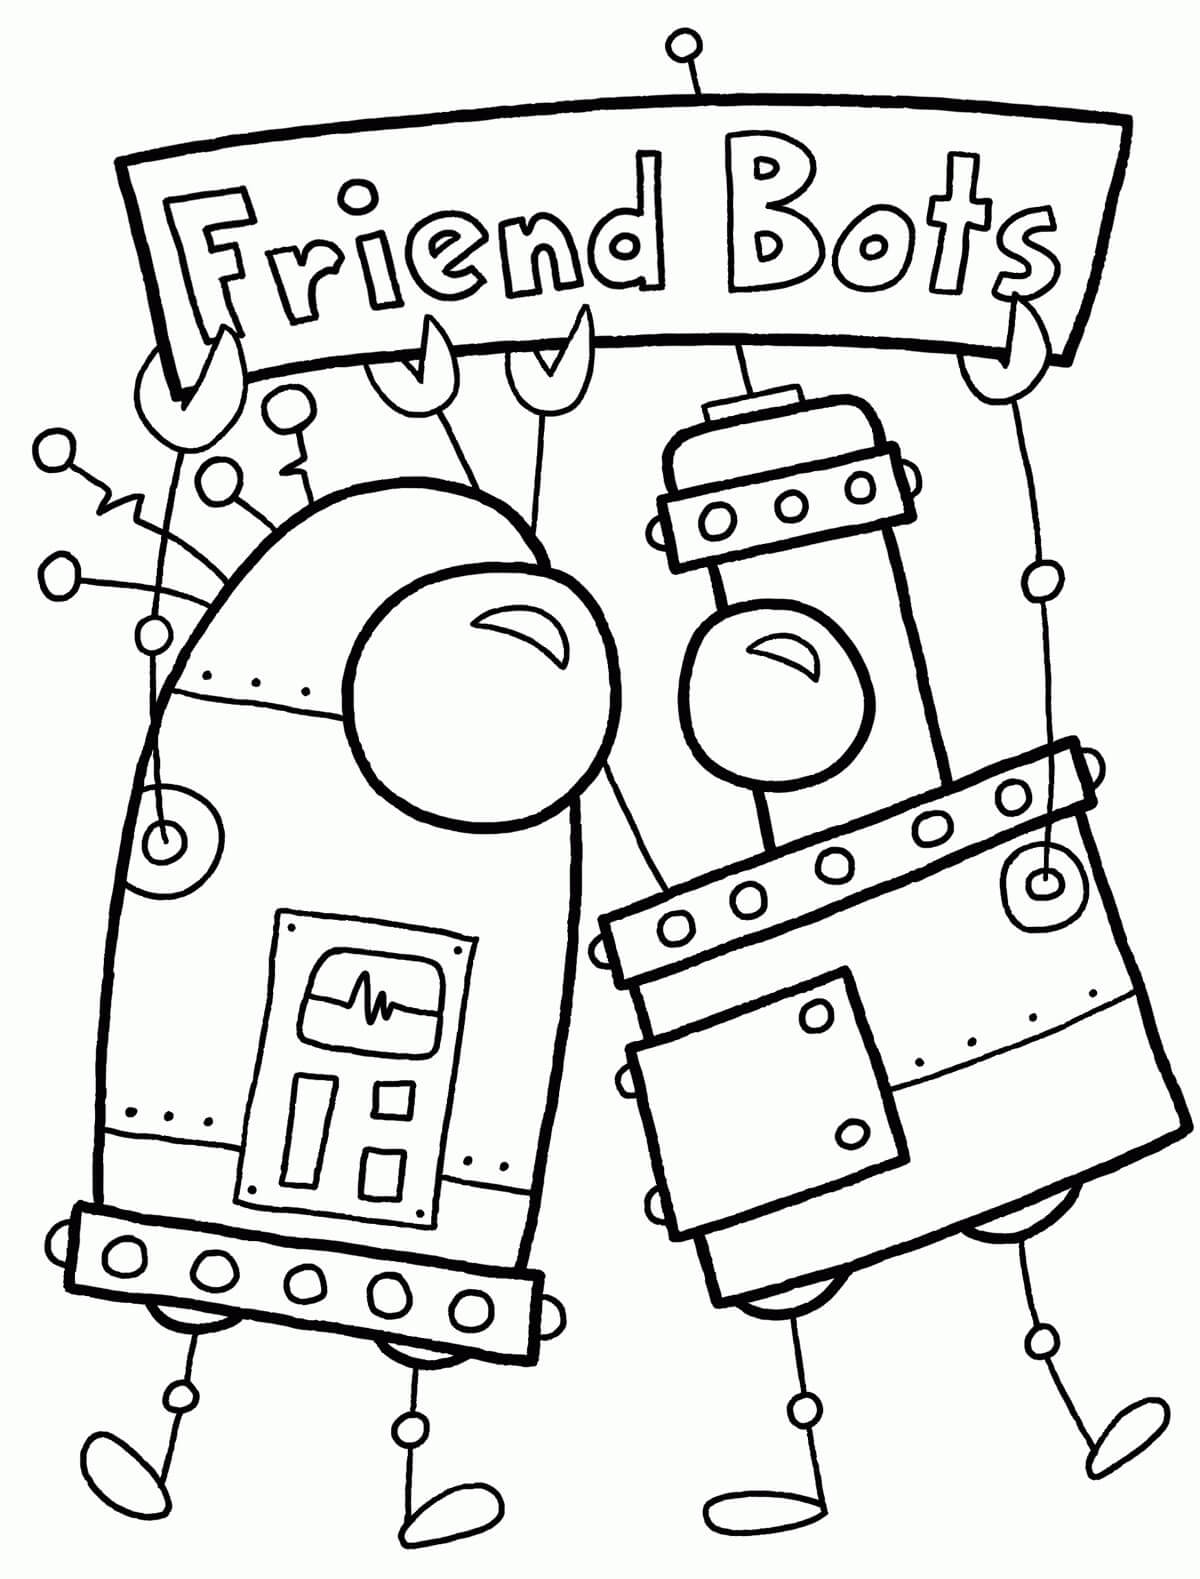 Desenhos de Amigo Bots para colorir